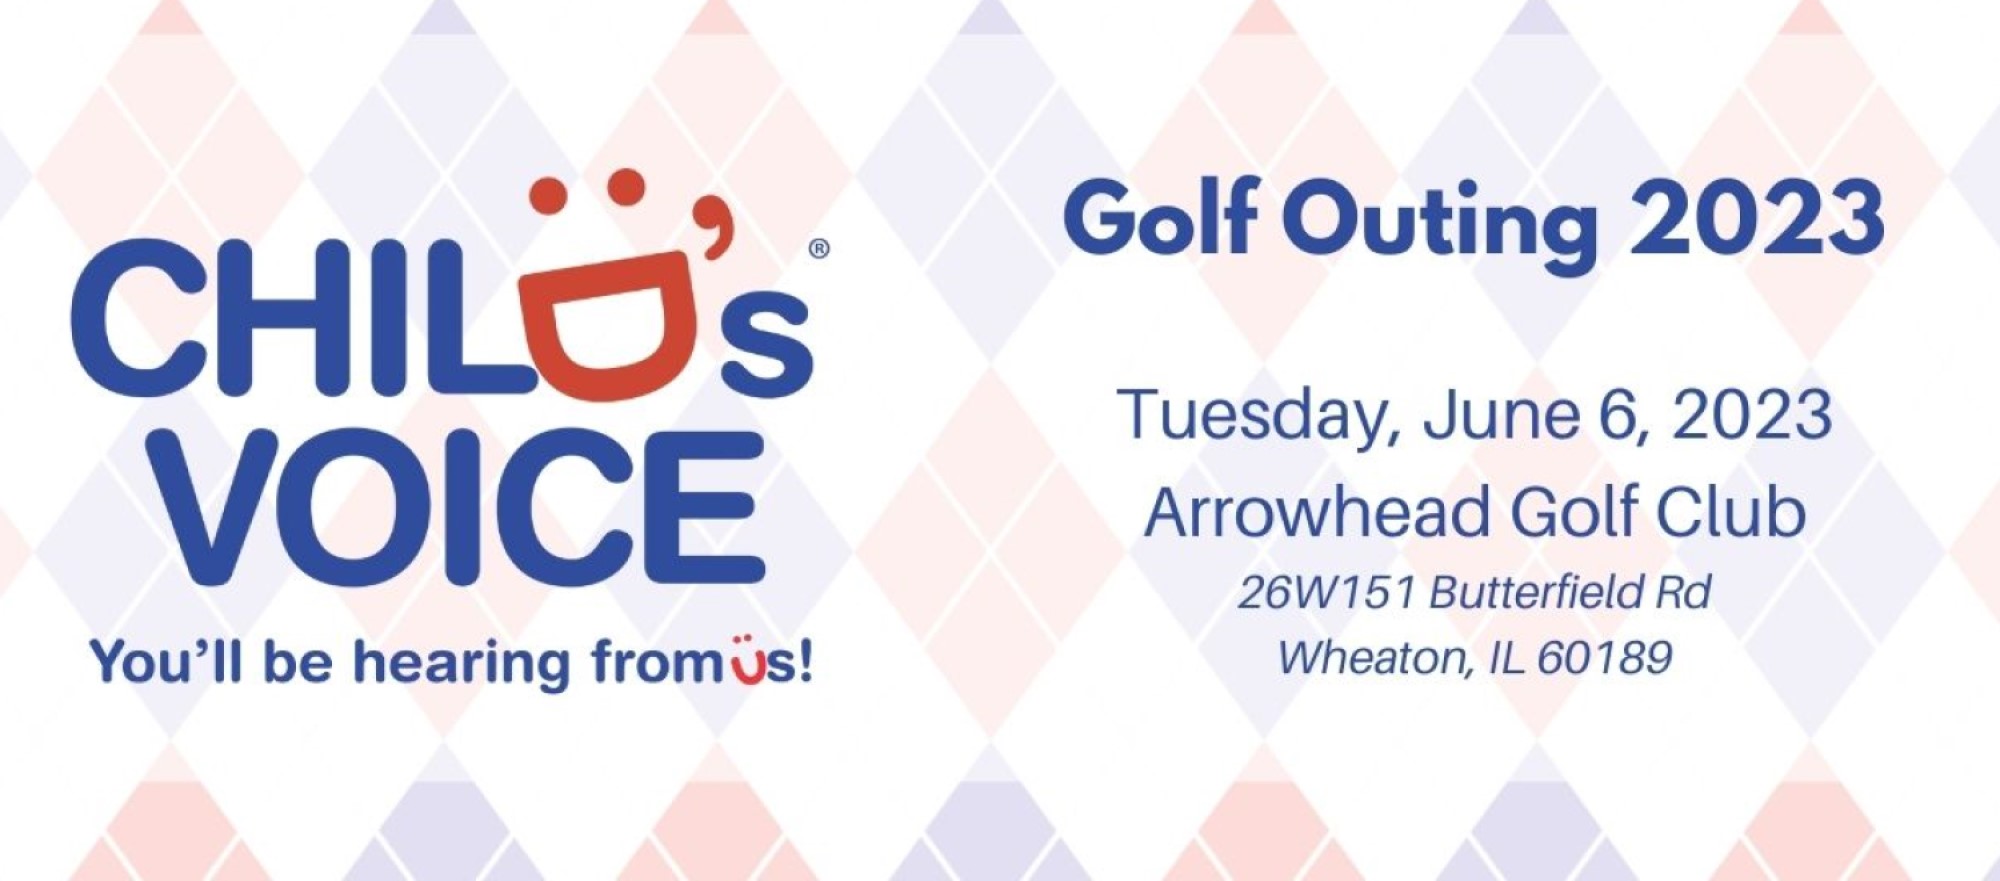 Child's Voice Golf Outing June 6, 2023 Arrowhead Golf Club Wheaton Illinois